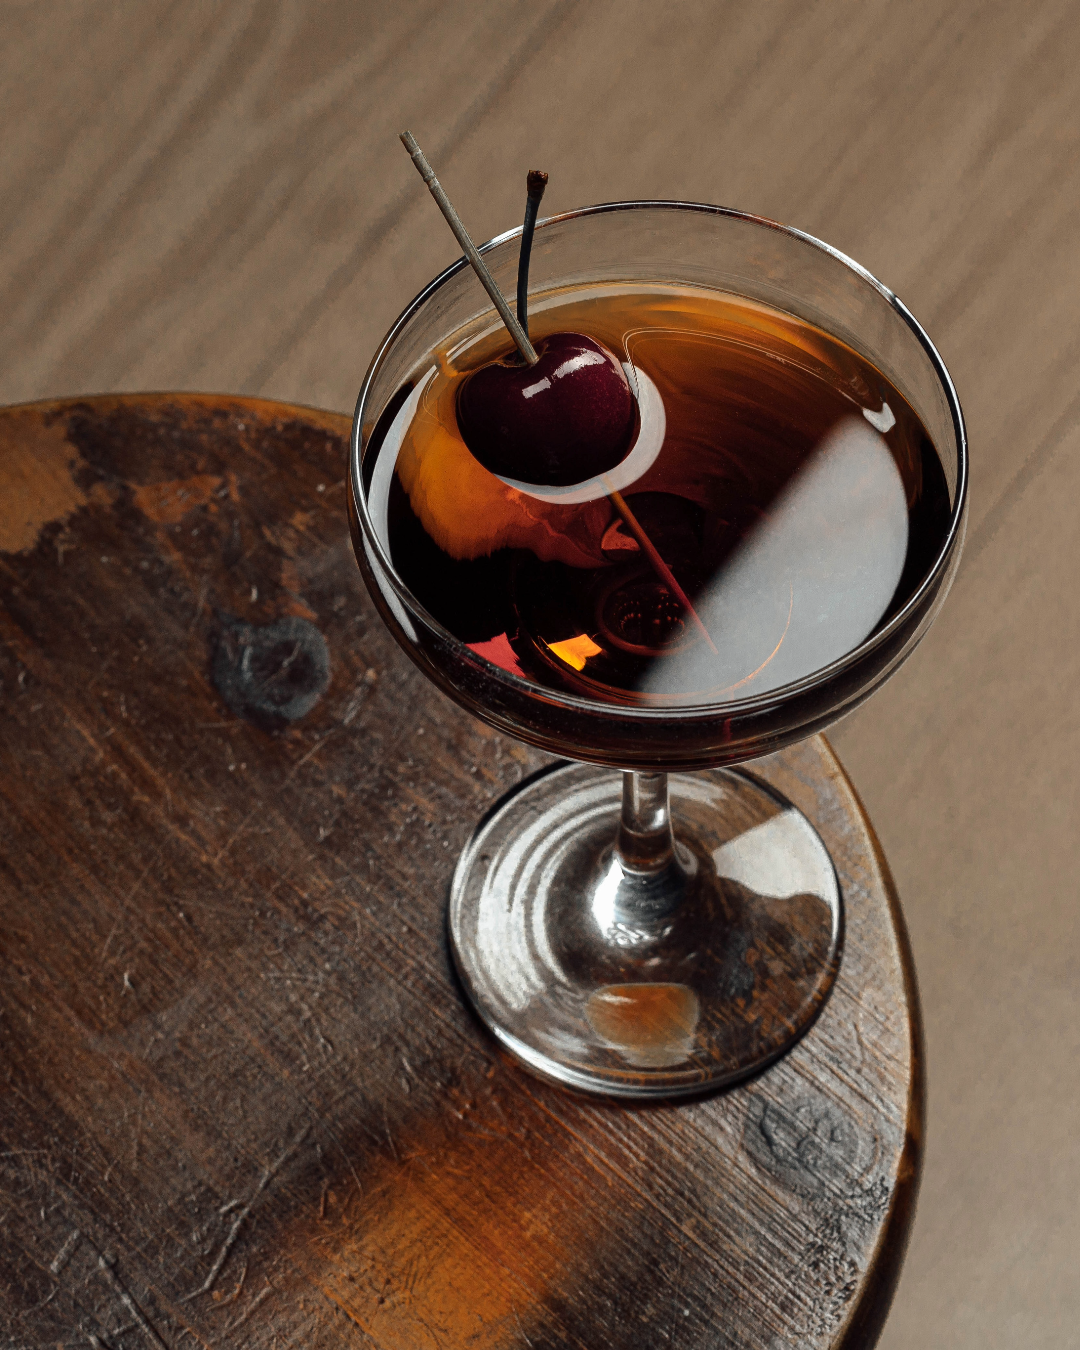 Black Manhattan Cocktail garnished with a cherry on a dark wooden surface